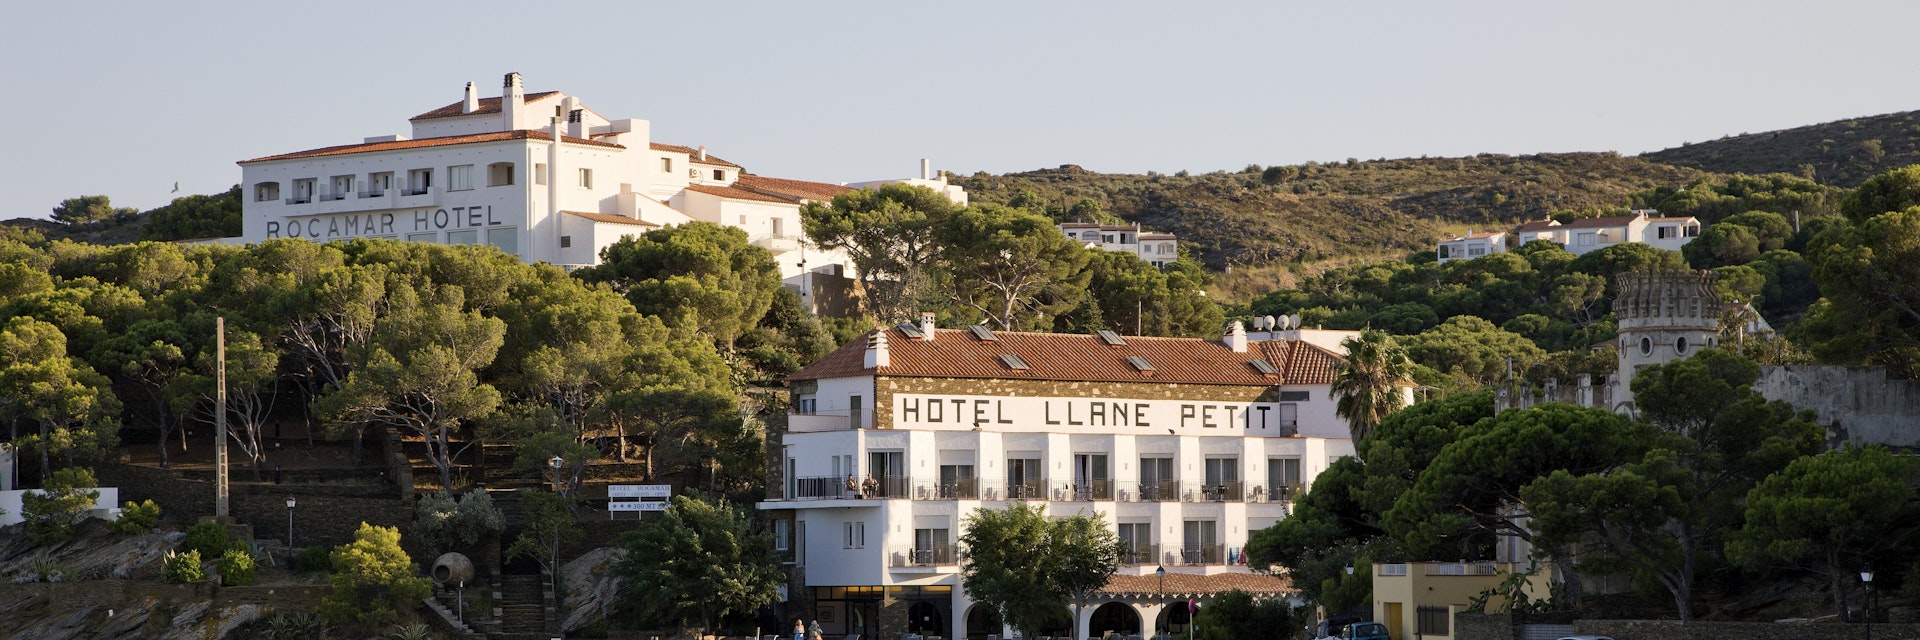 Hotel Llane Petit on waterfront.